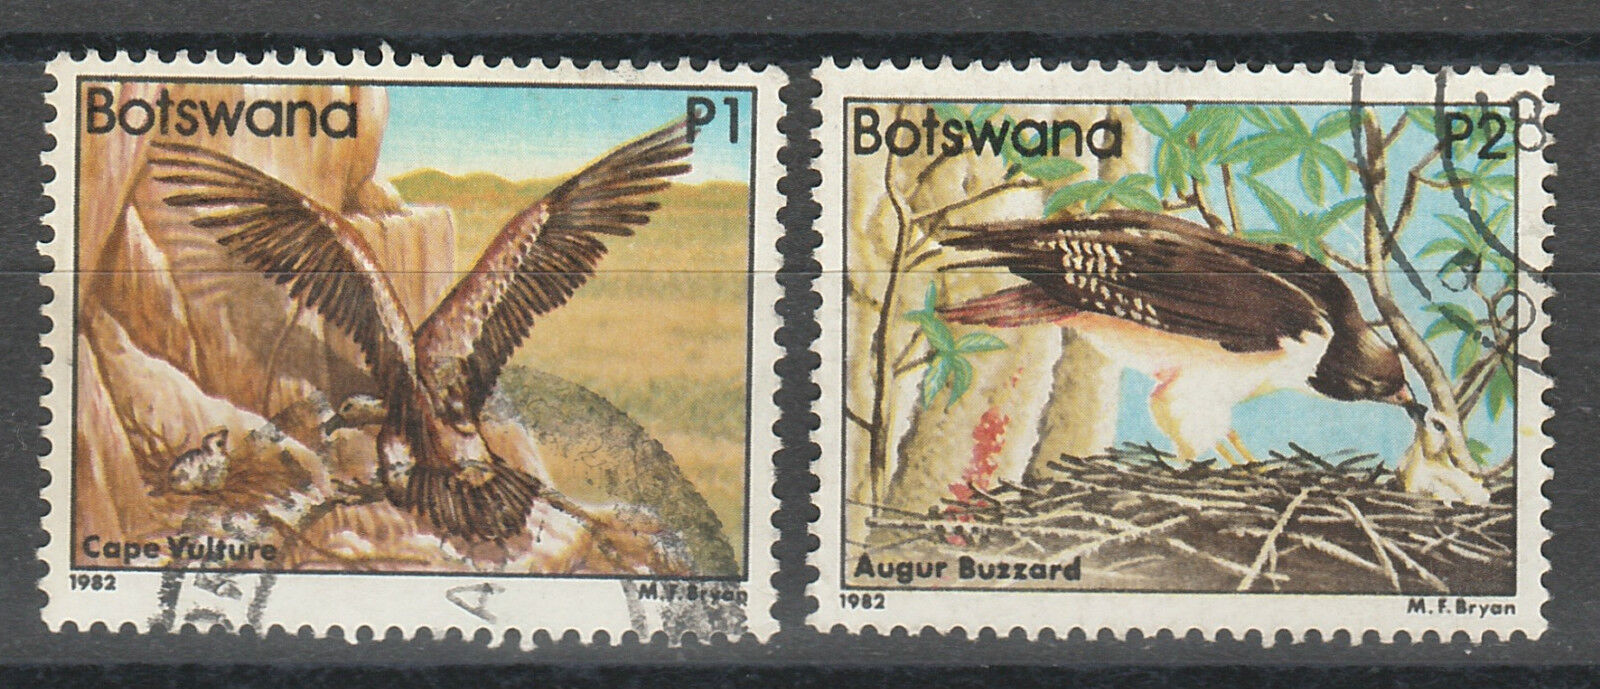 BOTSWANA 1982 BIRDS 1P AND 2P TOP 2 VALUES